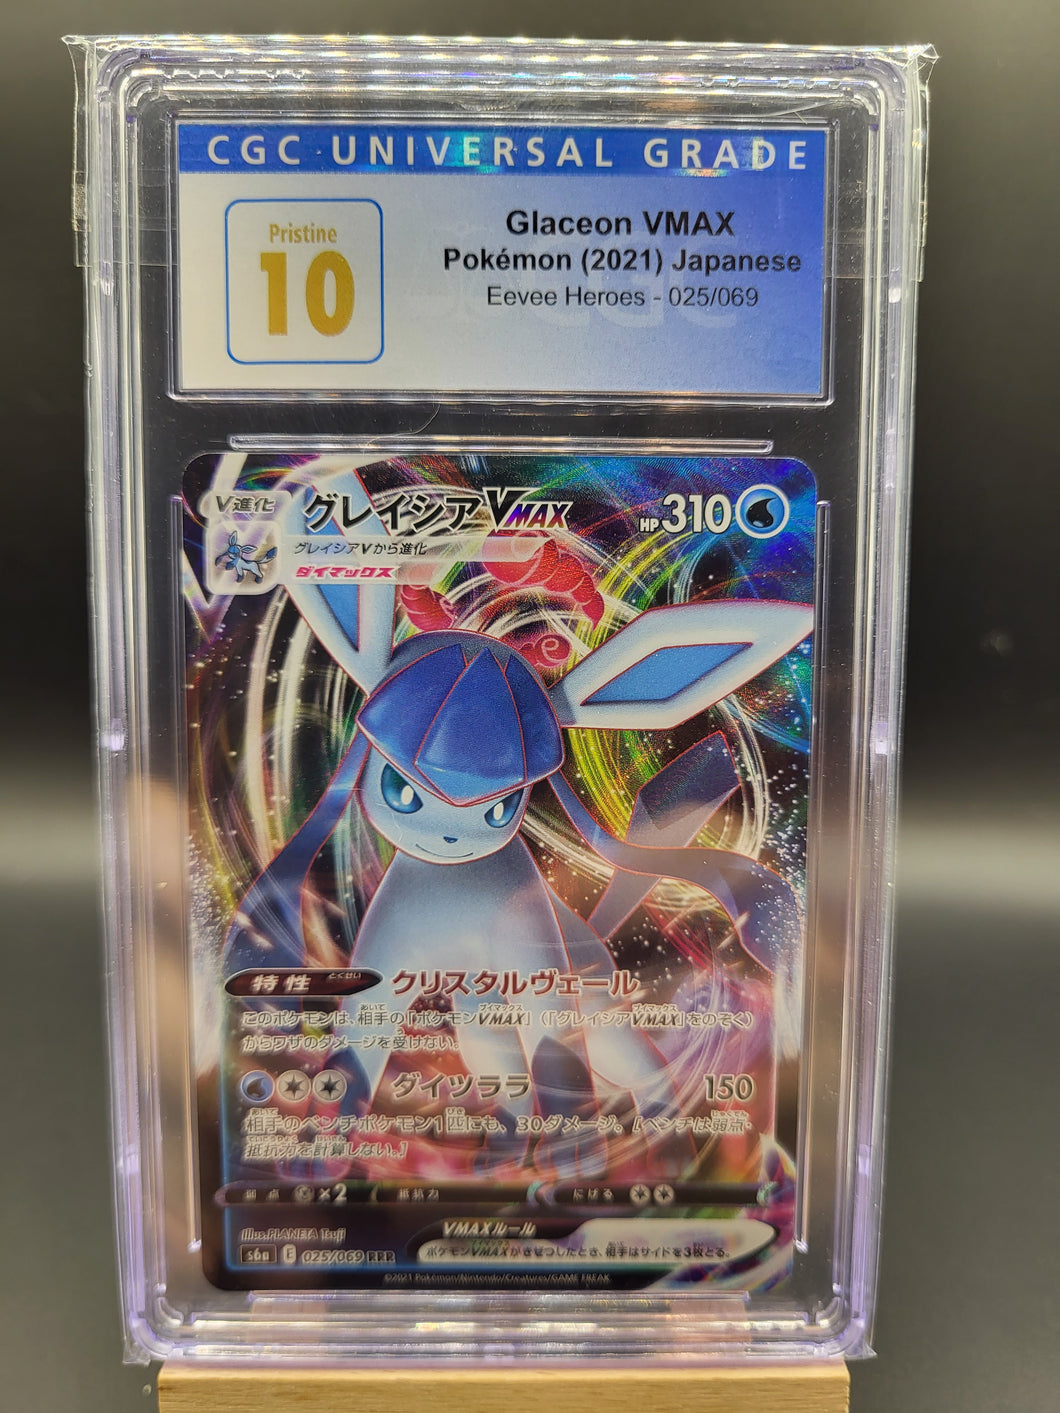 CGC PRISTINE 10 Glaceon VMAX Eevee Heros 025/069 Japanese